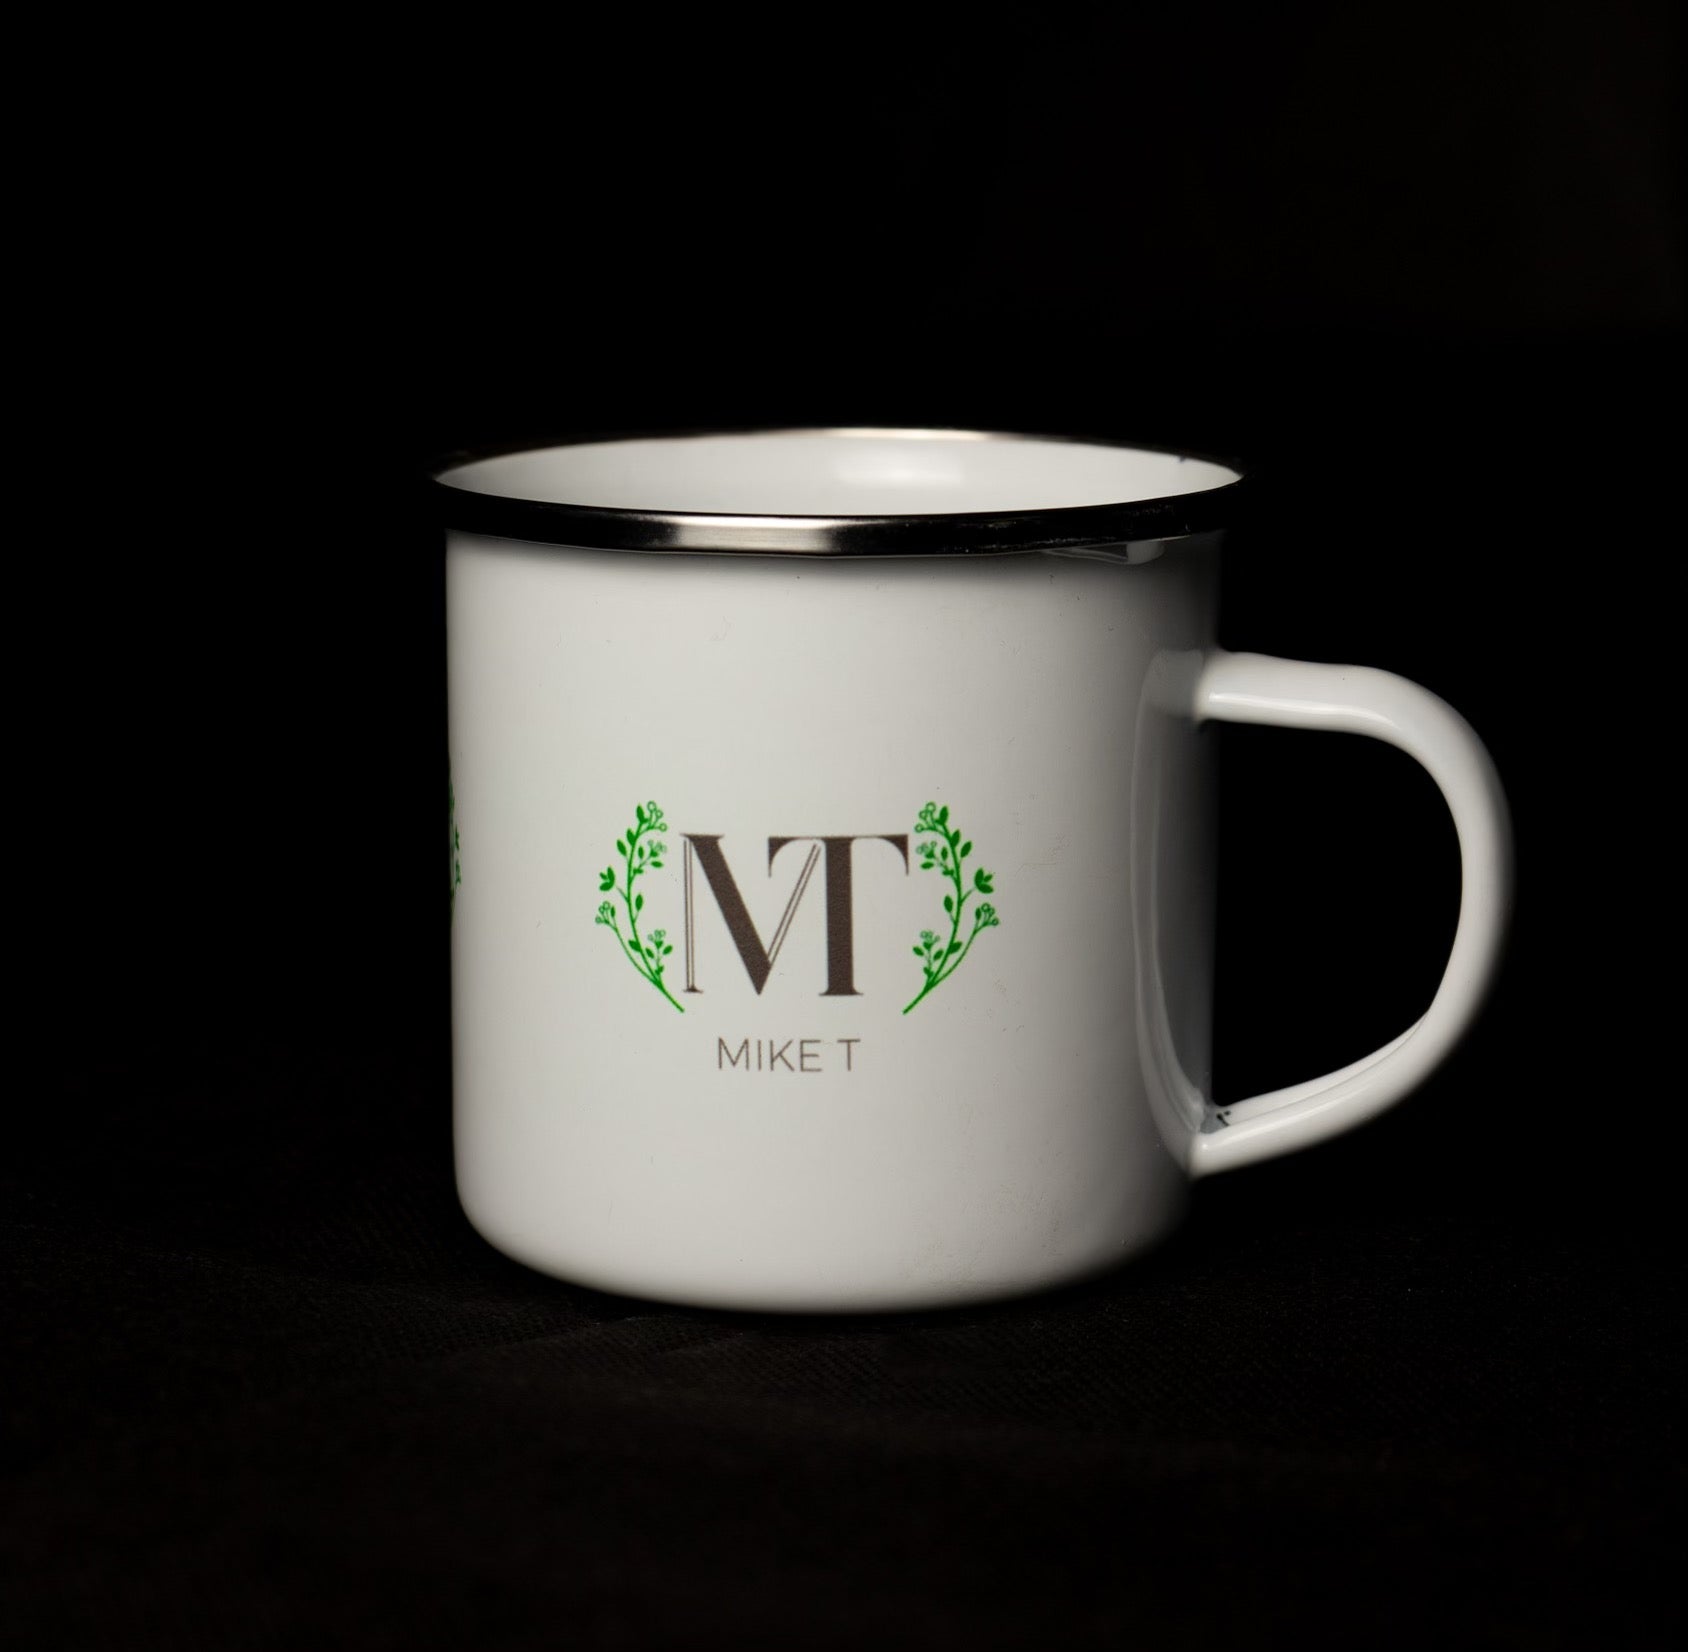 MT Logo Enamel Camping Mug